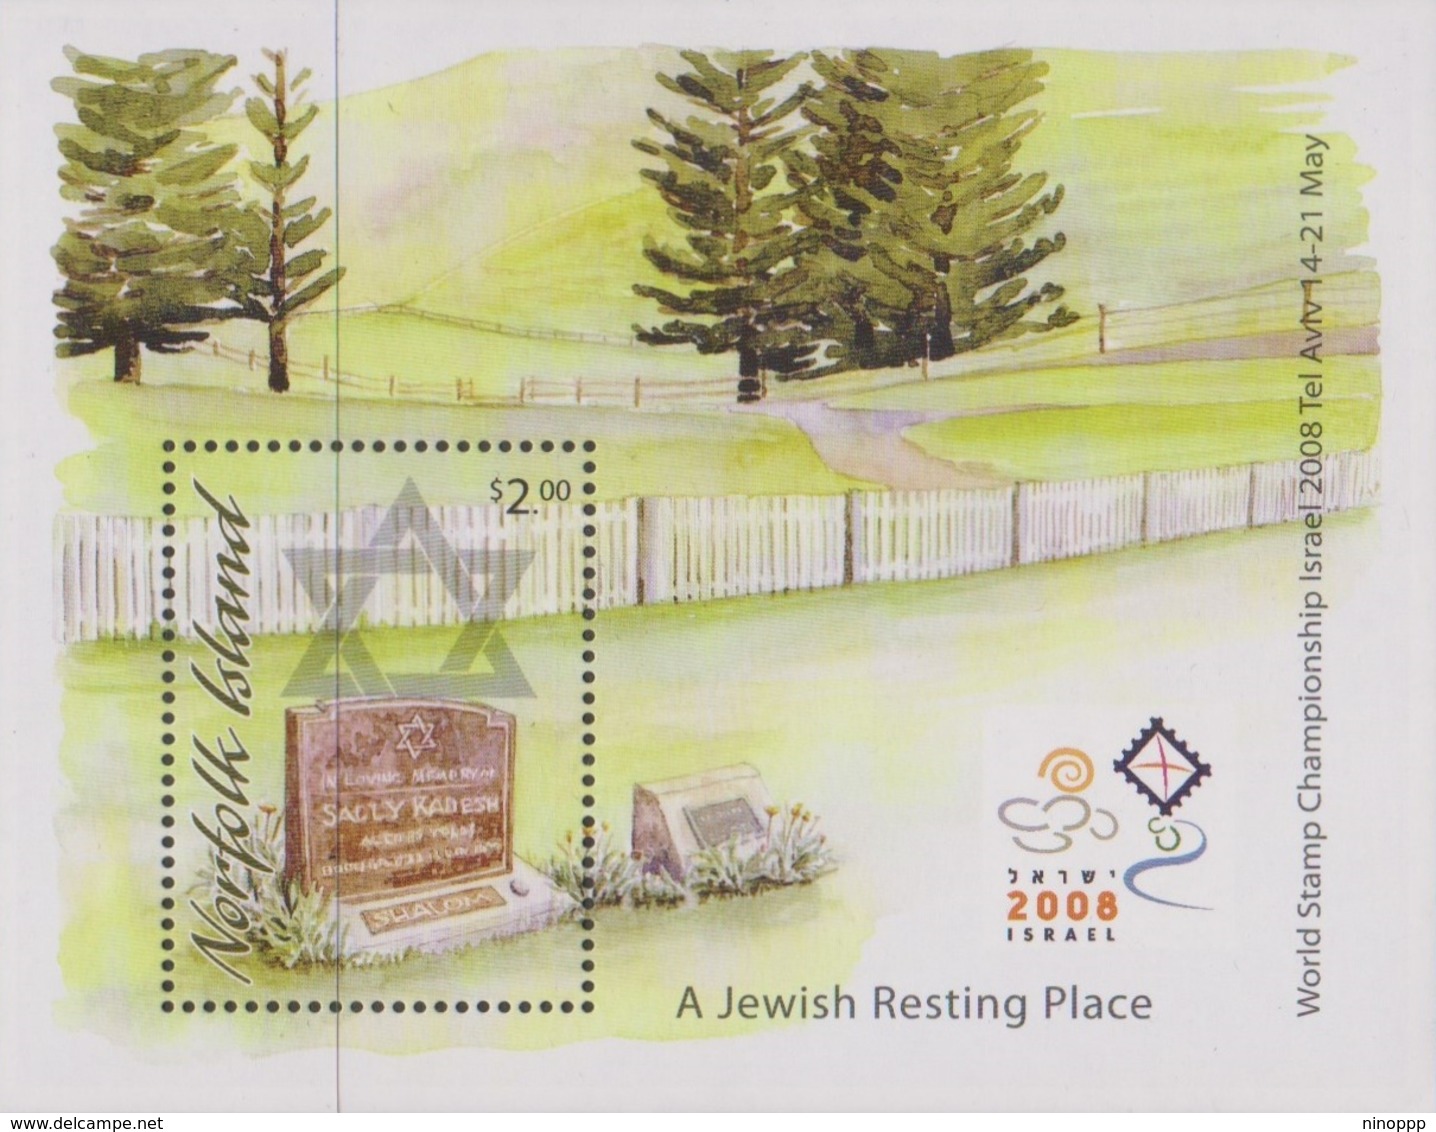 Norfolk Island ASC 1011 MS 2008 A Jewish Resting Place, Miniature Sheet, Mint Never Hinged - Norfolk Island